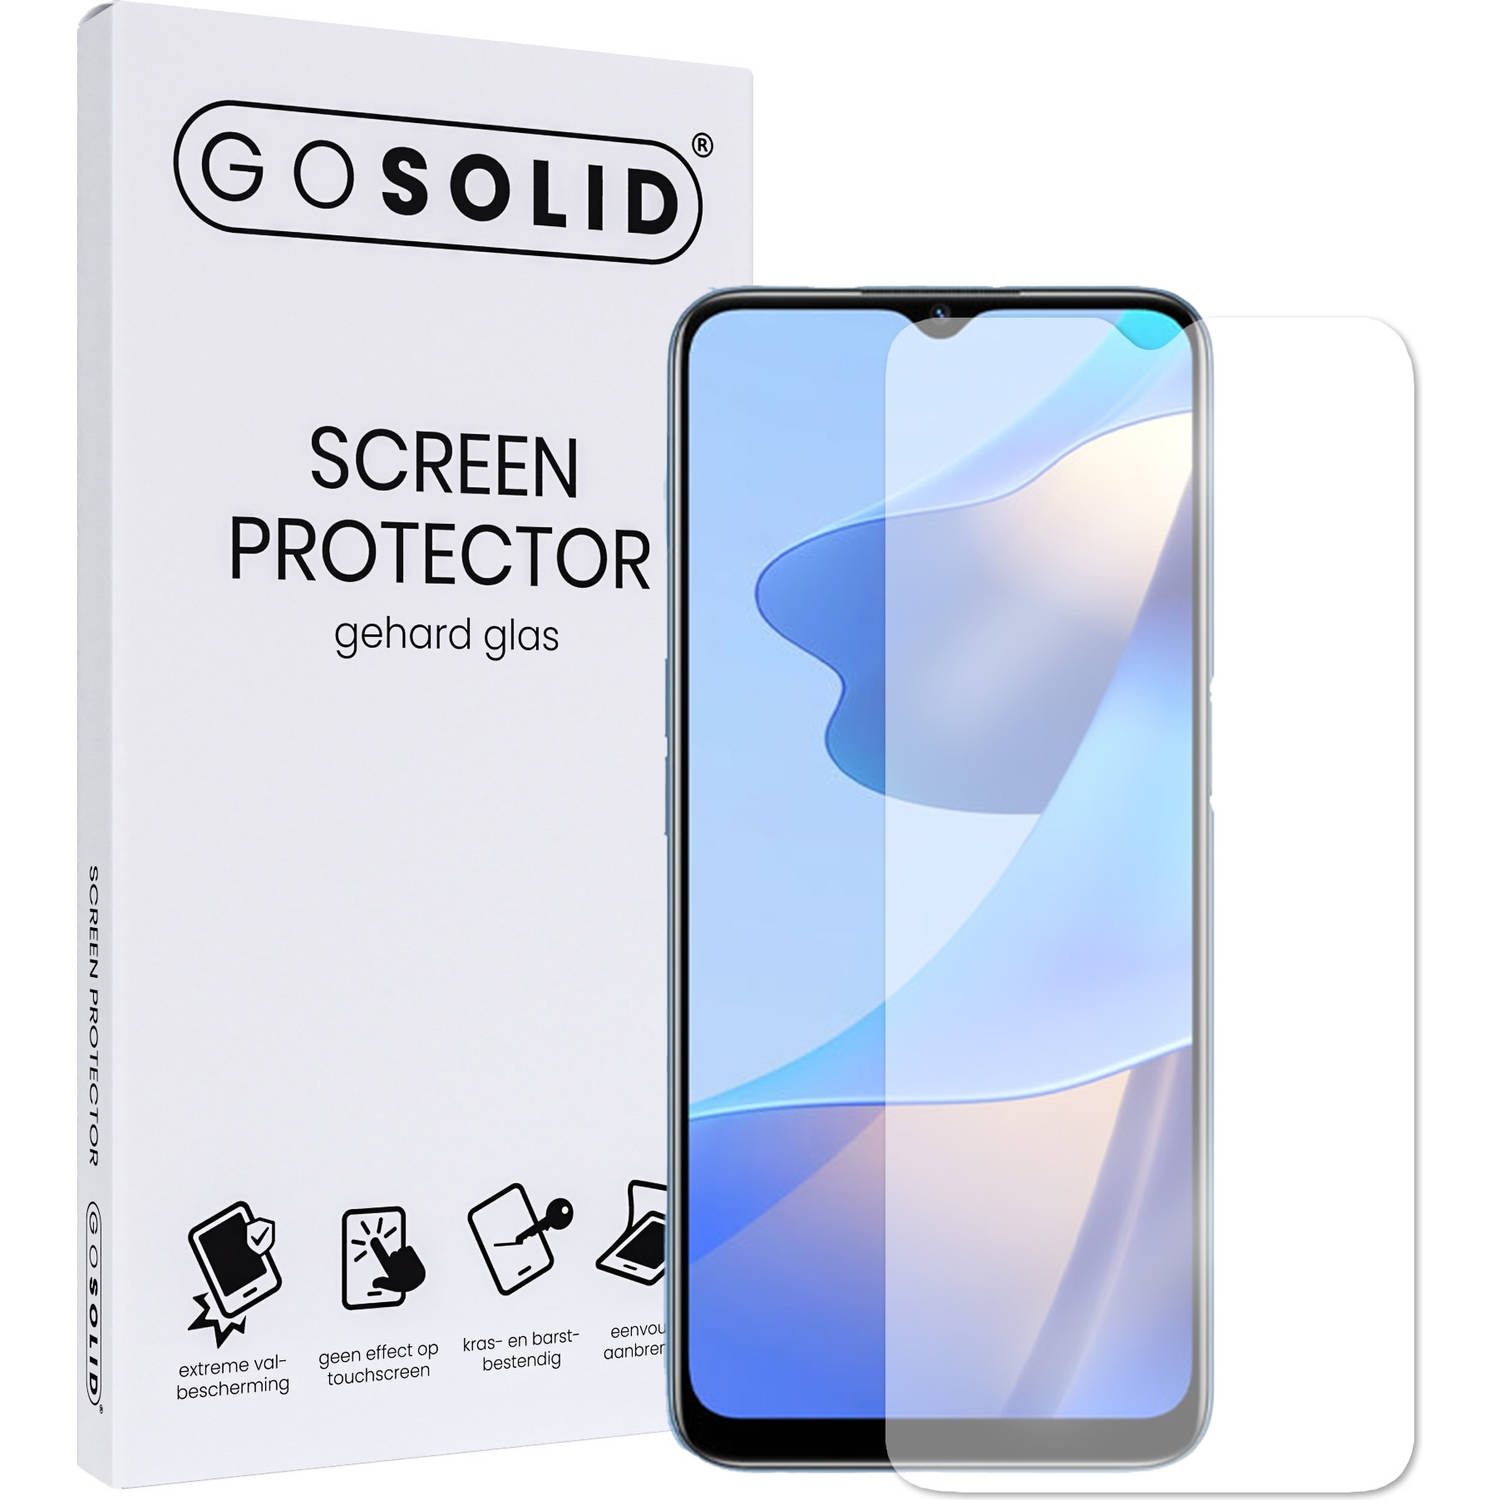 GO SOLID! Screenprotector voor Oppo A57 gehard glas